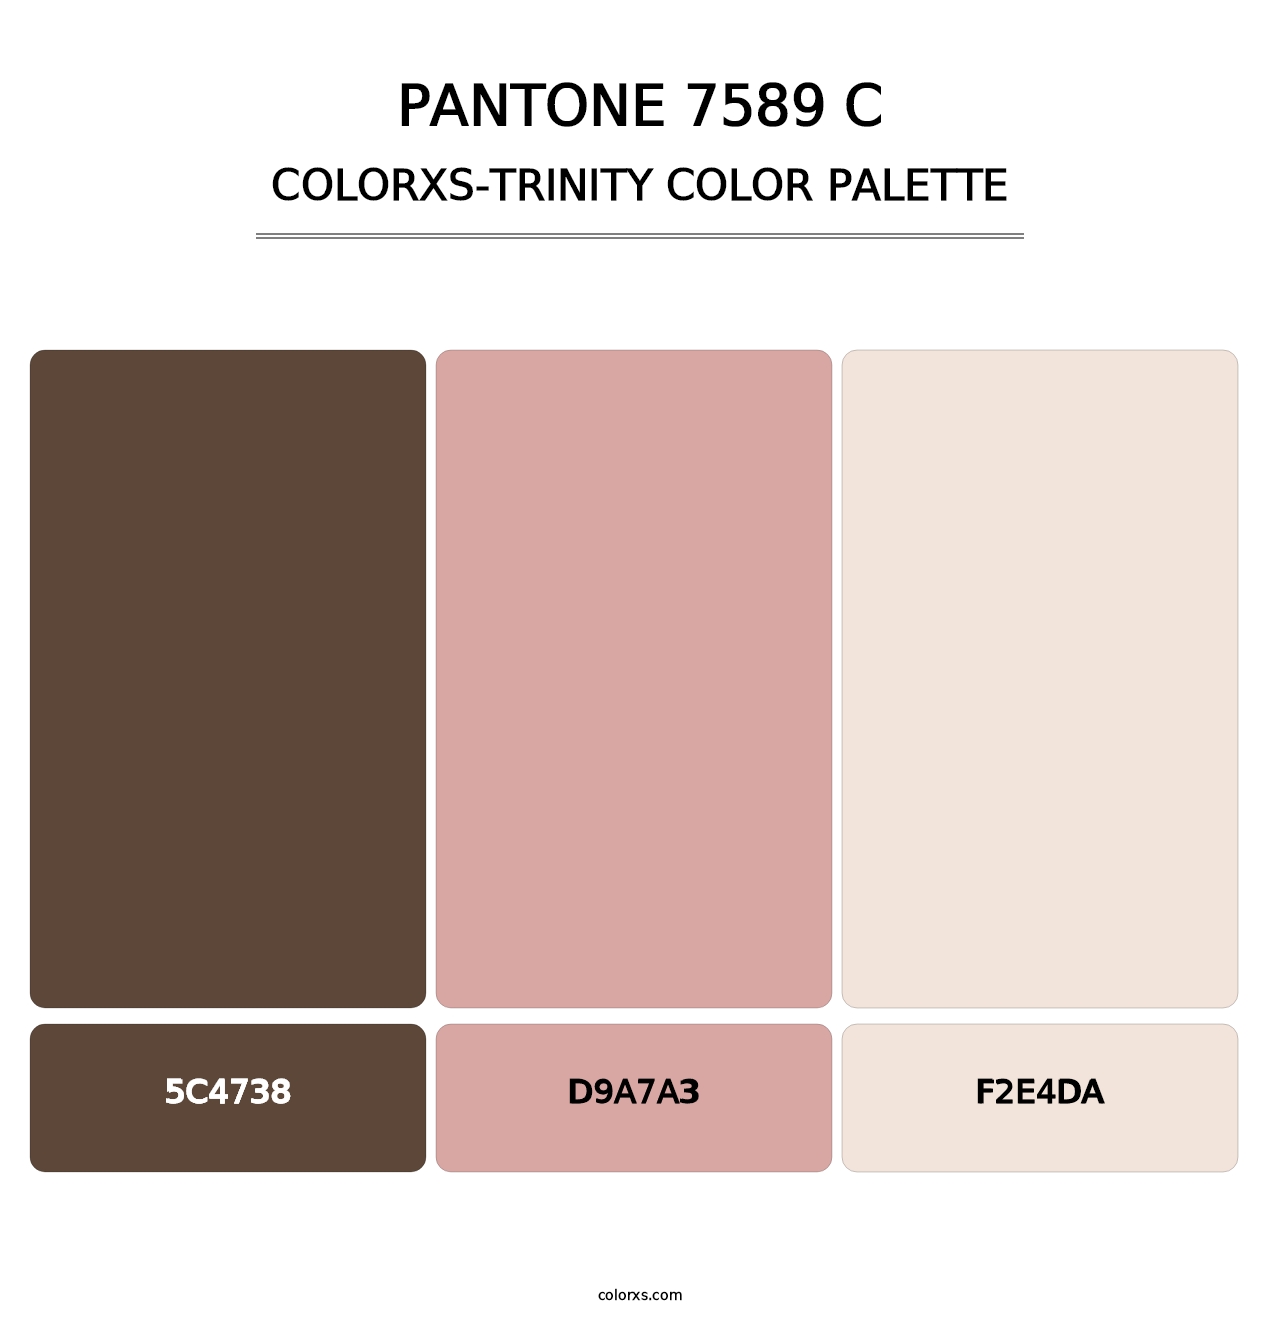 PANTONE 7589 C - Colorxs Trinity Palette